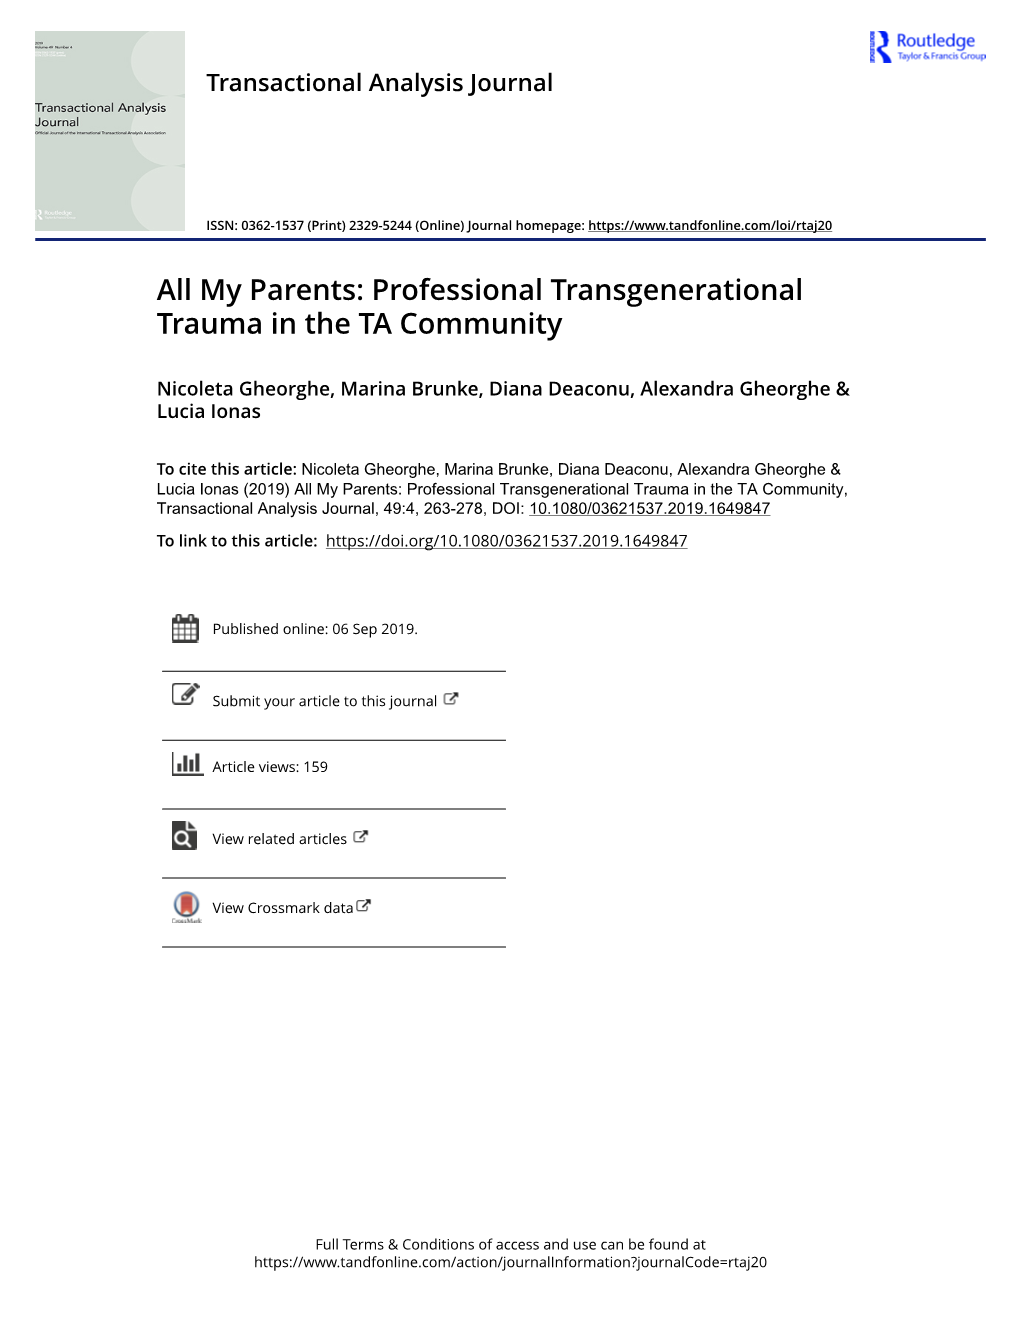 Professional Transgenerational Trauma in the TA Community